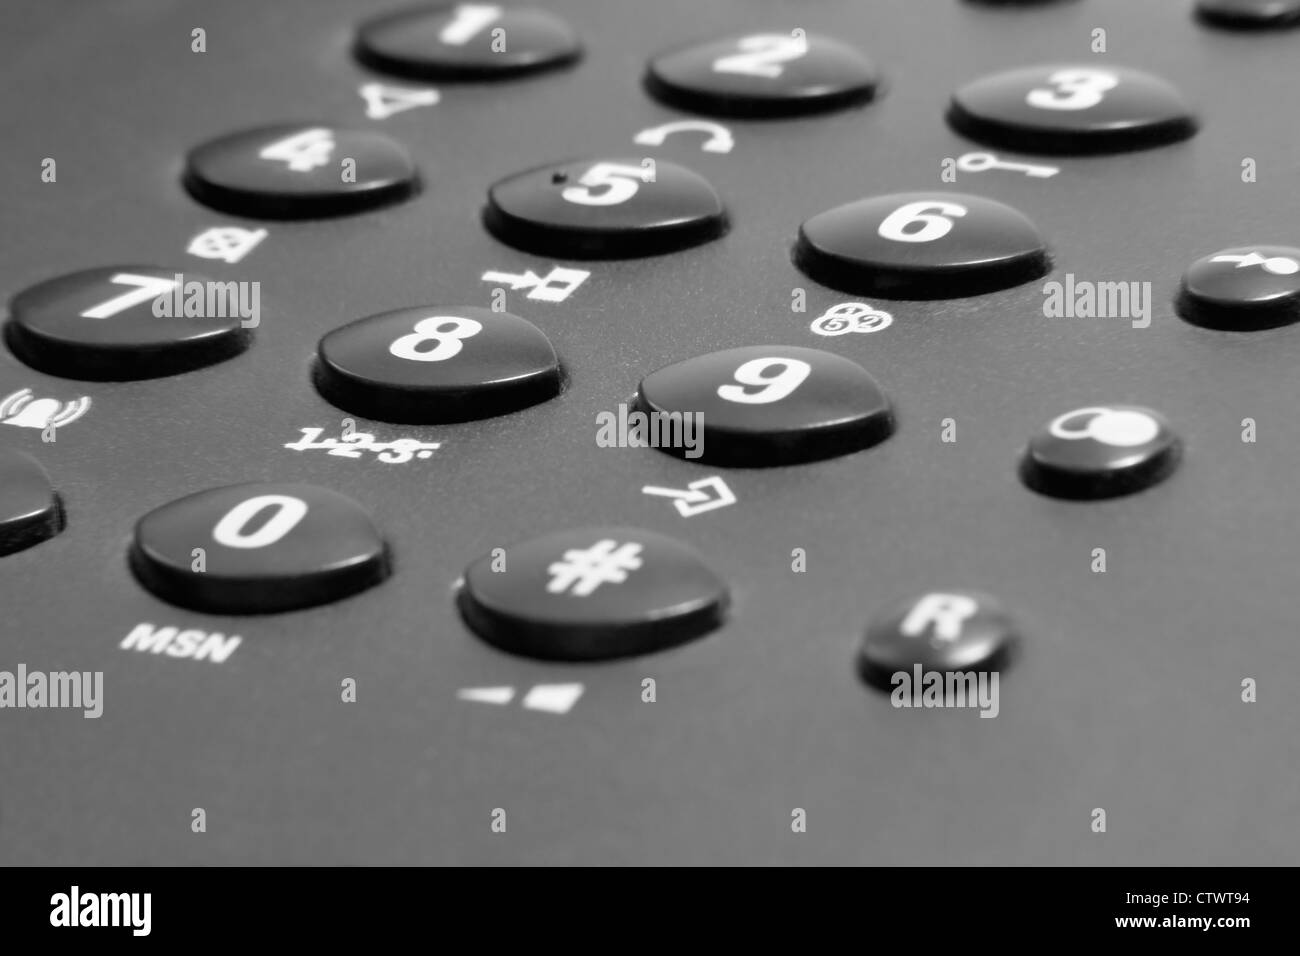 dark telephone keypad closeup with white numbers Stock Photo